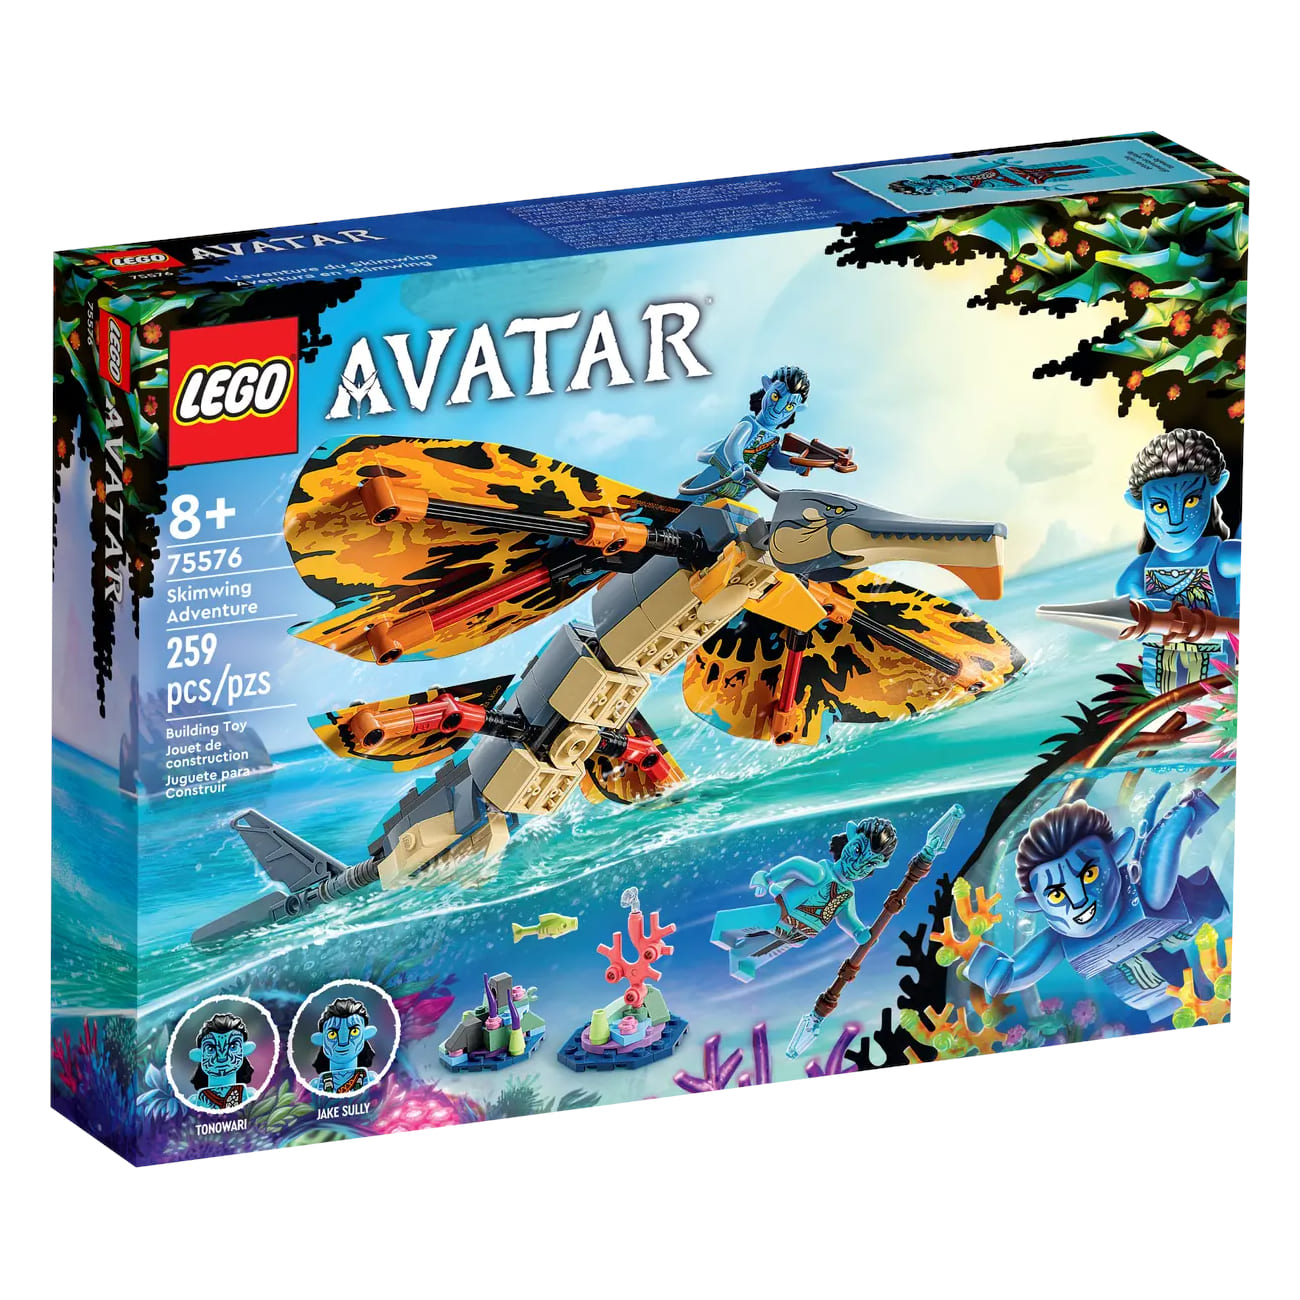 Конструктор LEGO Avatar Skimwing Adventure 75576, 259 деталей lego 75576 avatar skimwing adventure